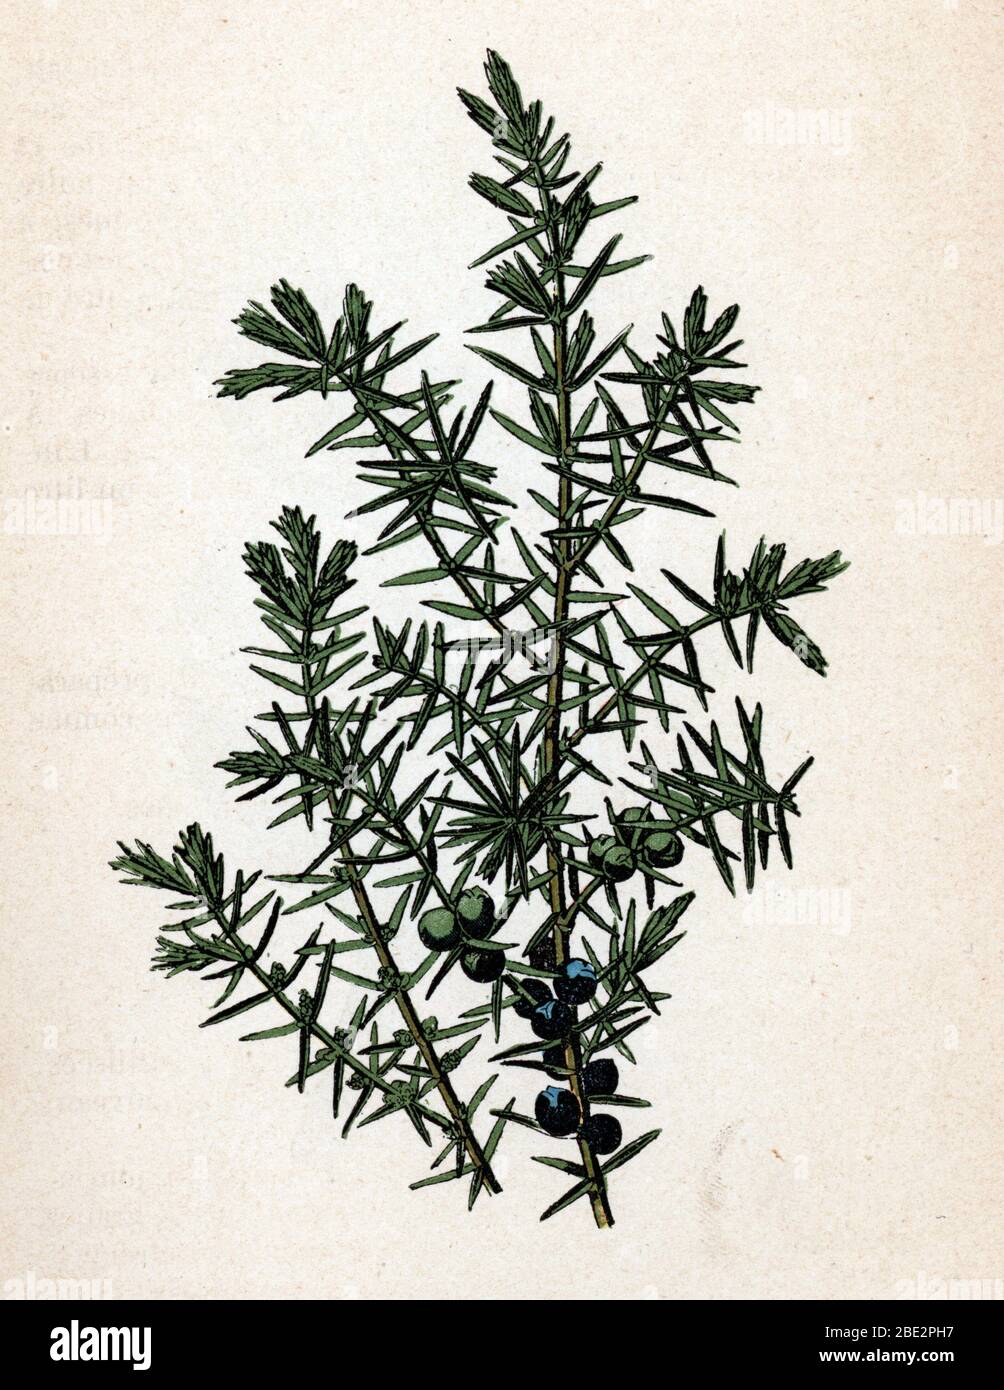 'Genevrier' (Juniperus) (Juniper) Planche de botanique tiree de 'Atlas colorie des plantes medicinales' de Paul Hariot, 1900 (Botanical plate of medic Stock Photo